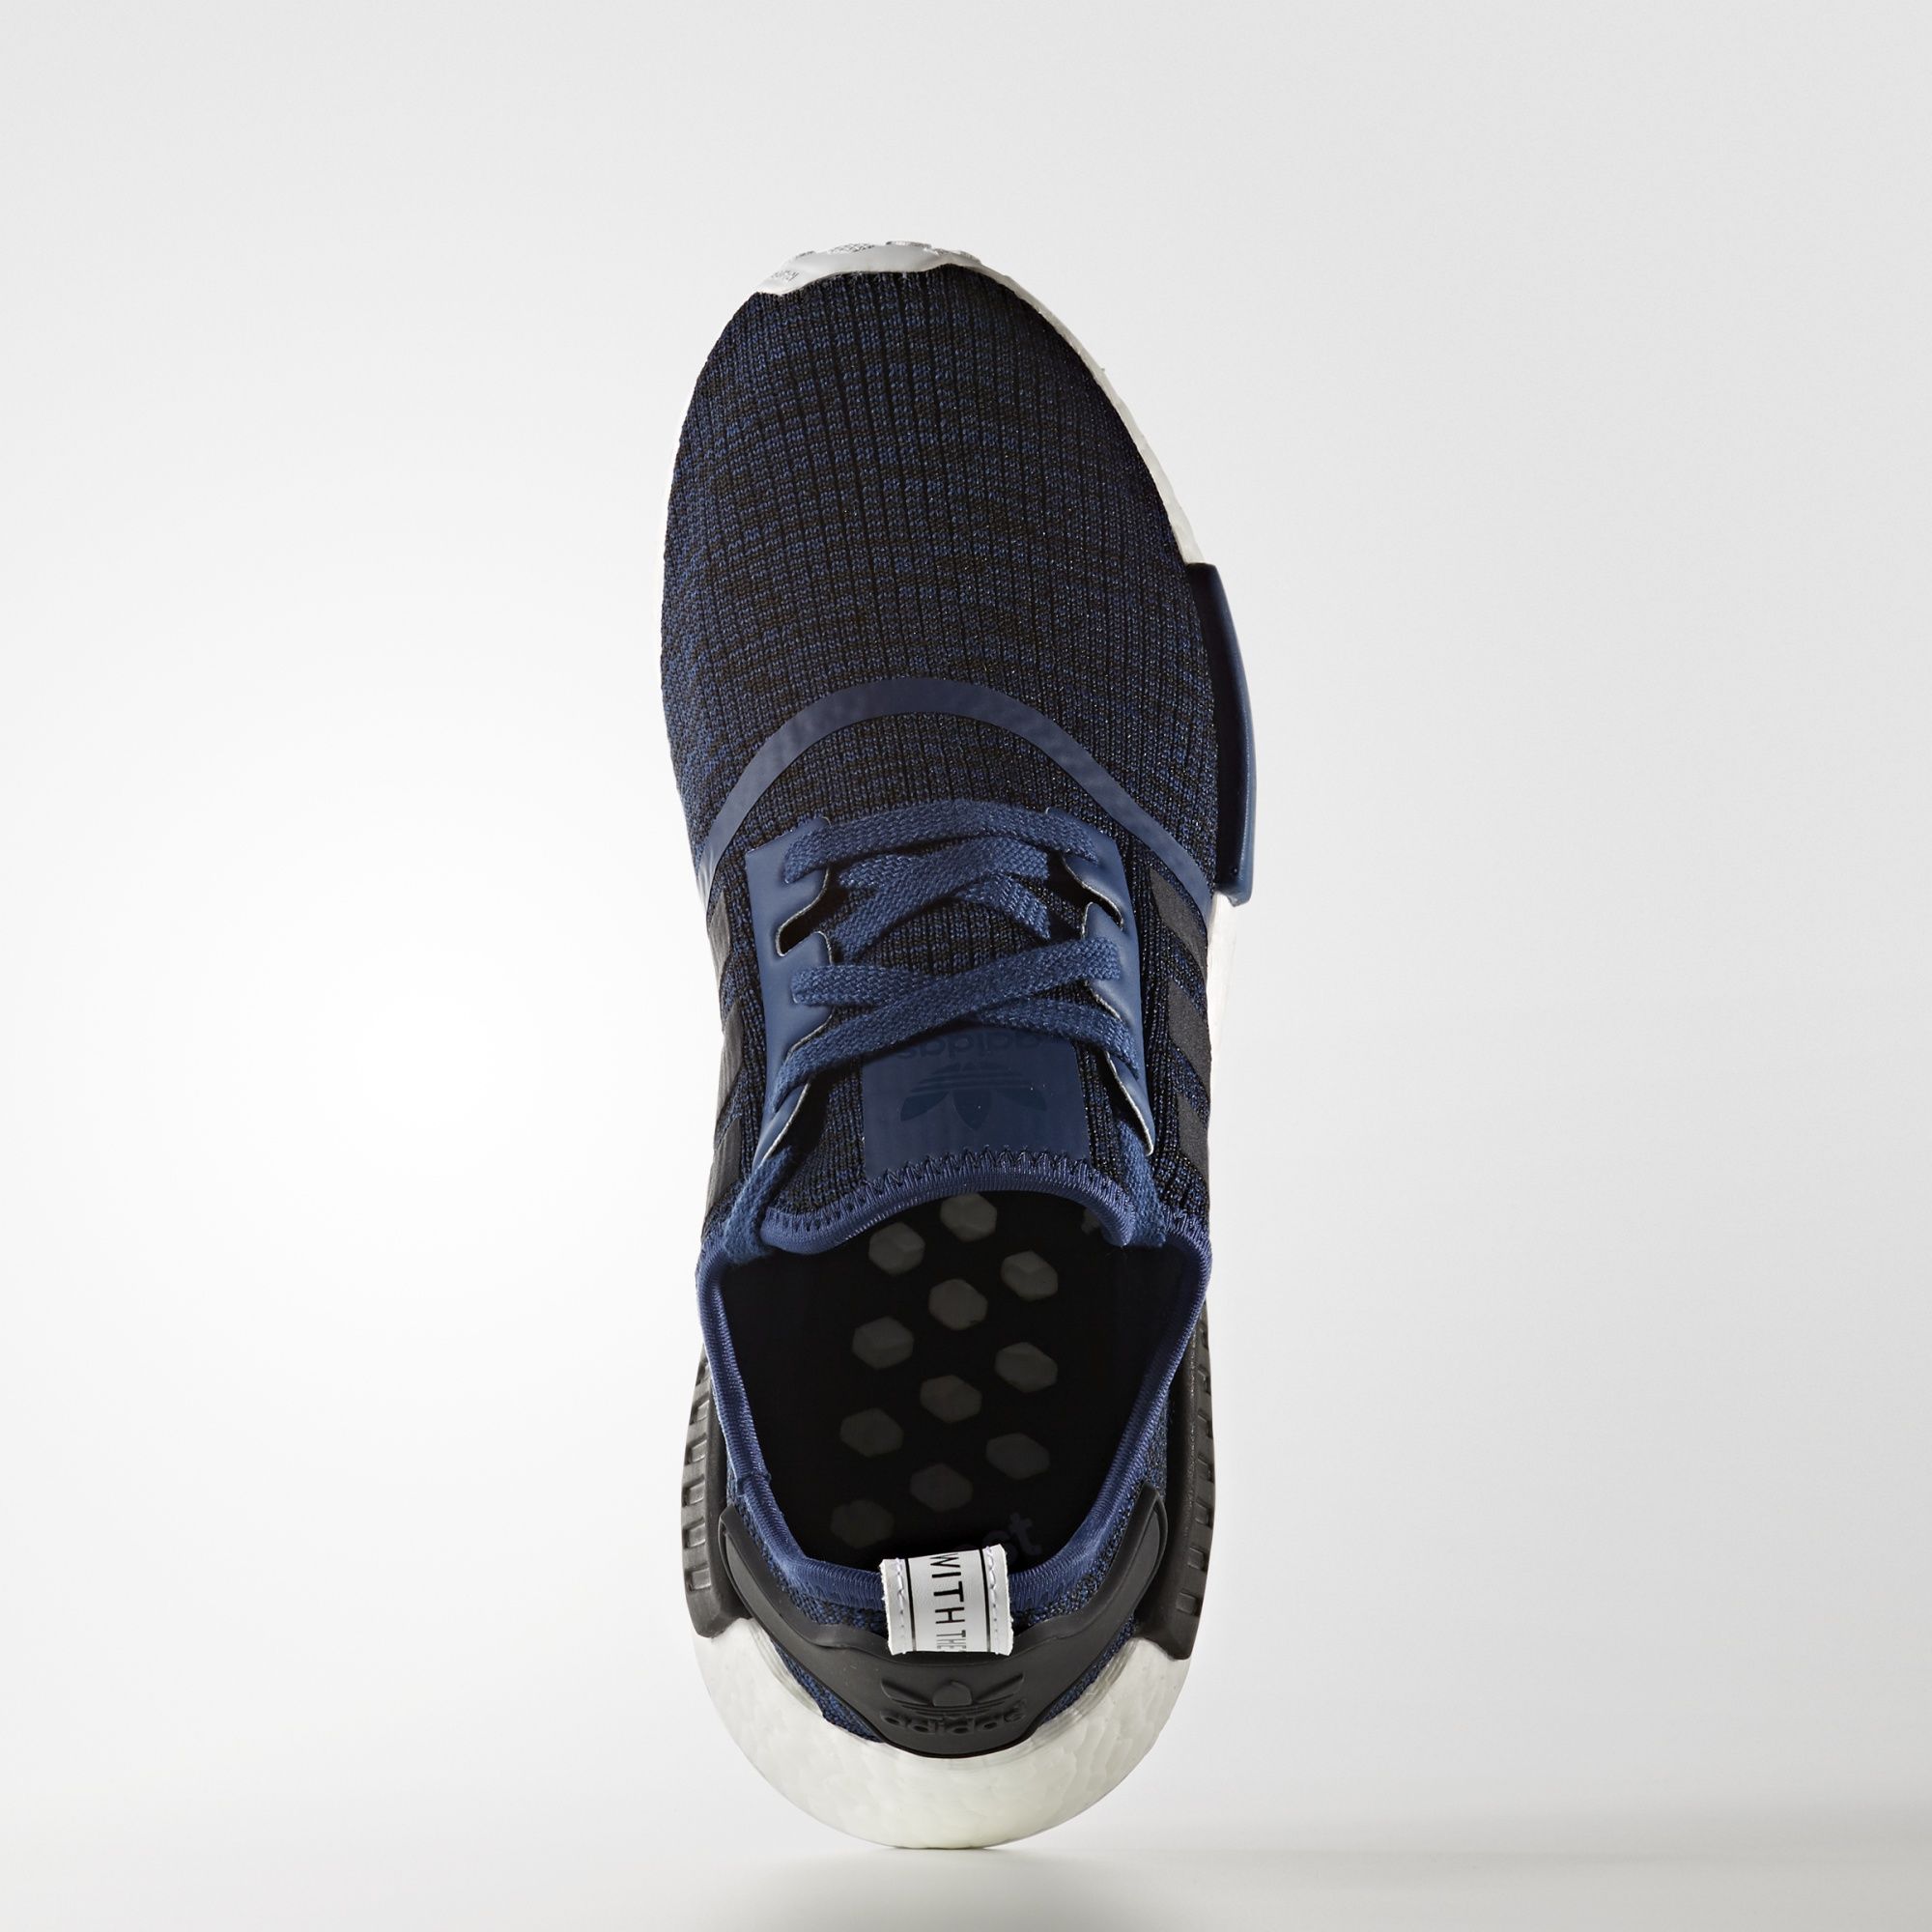 Adidas NMD_R1
Blue / Black / Navy